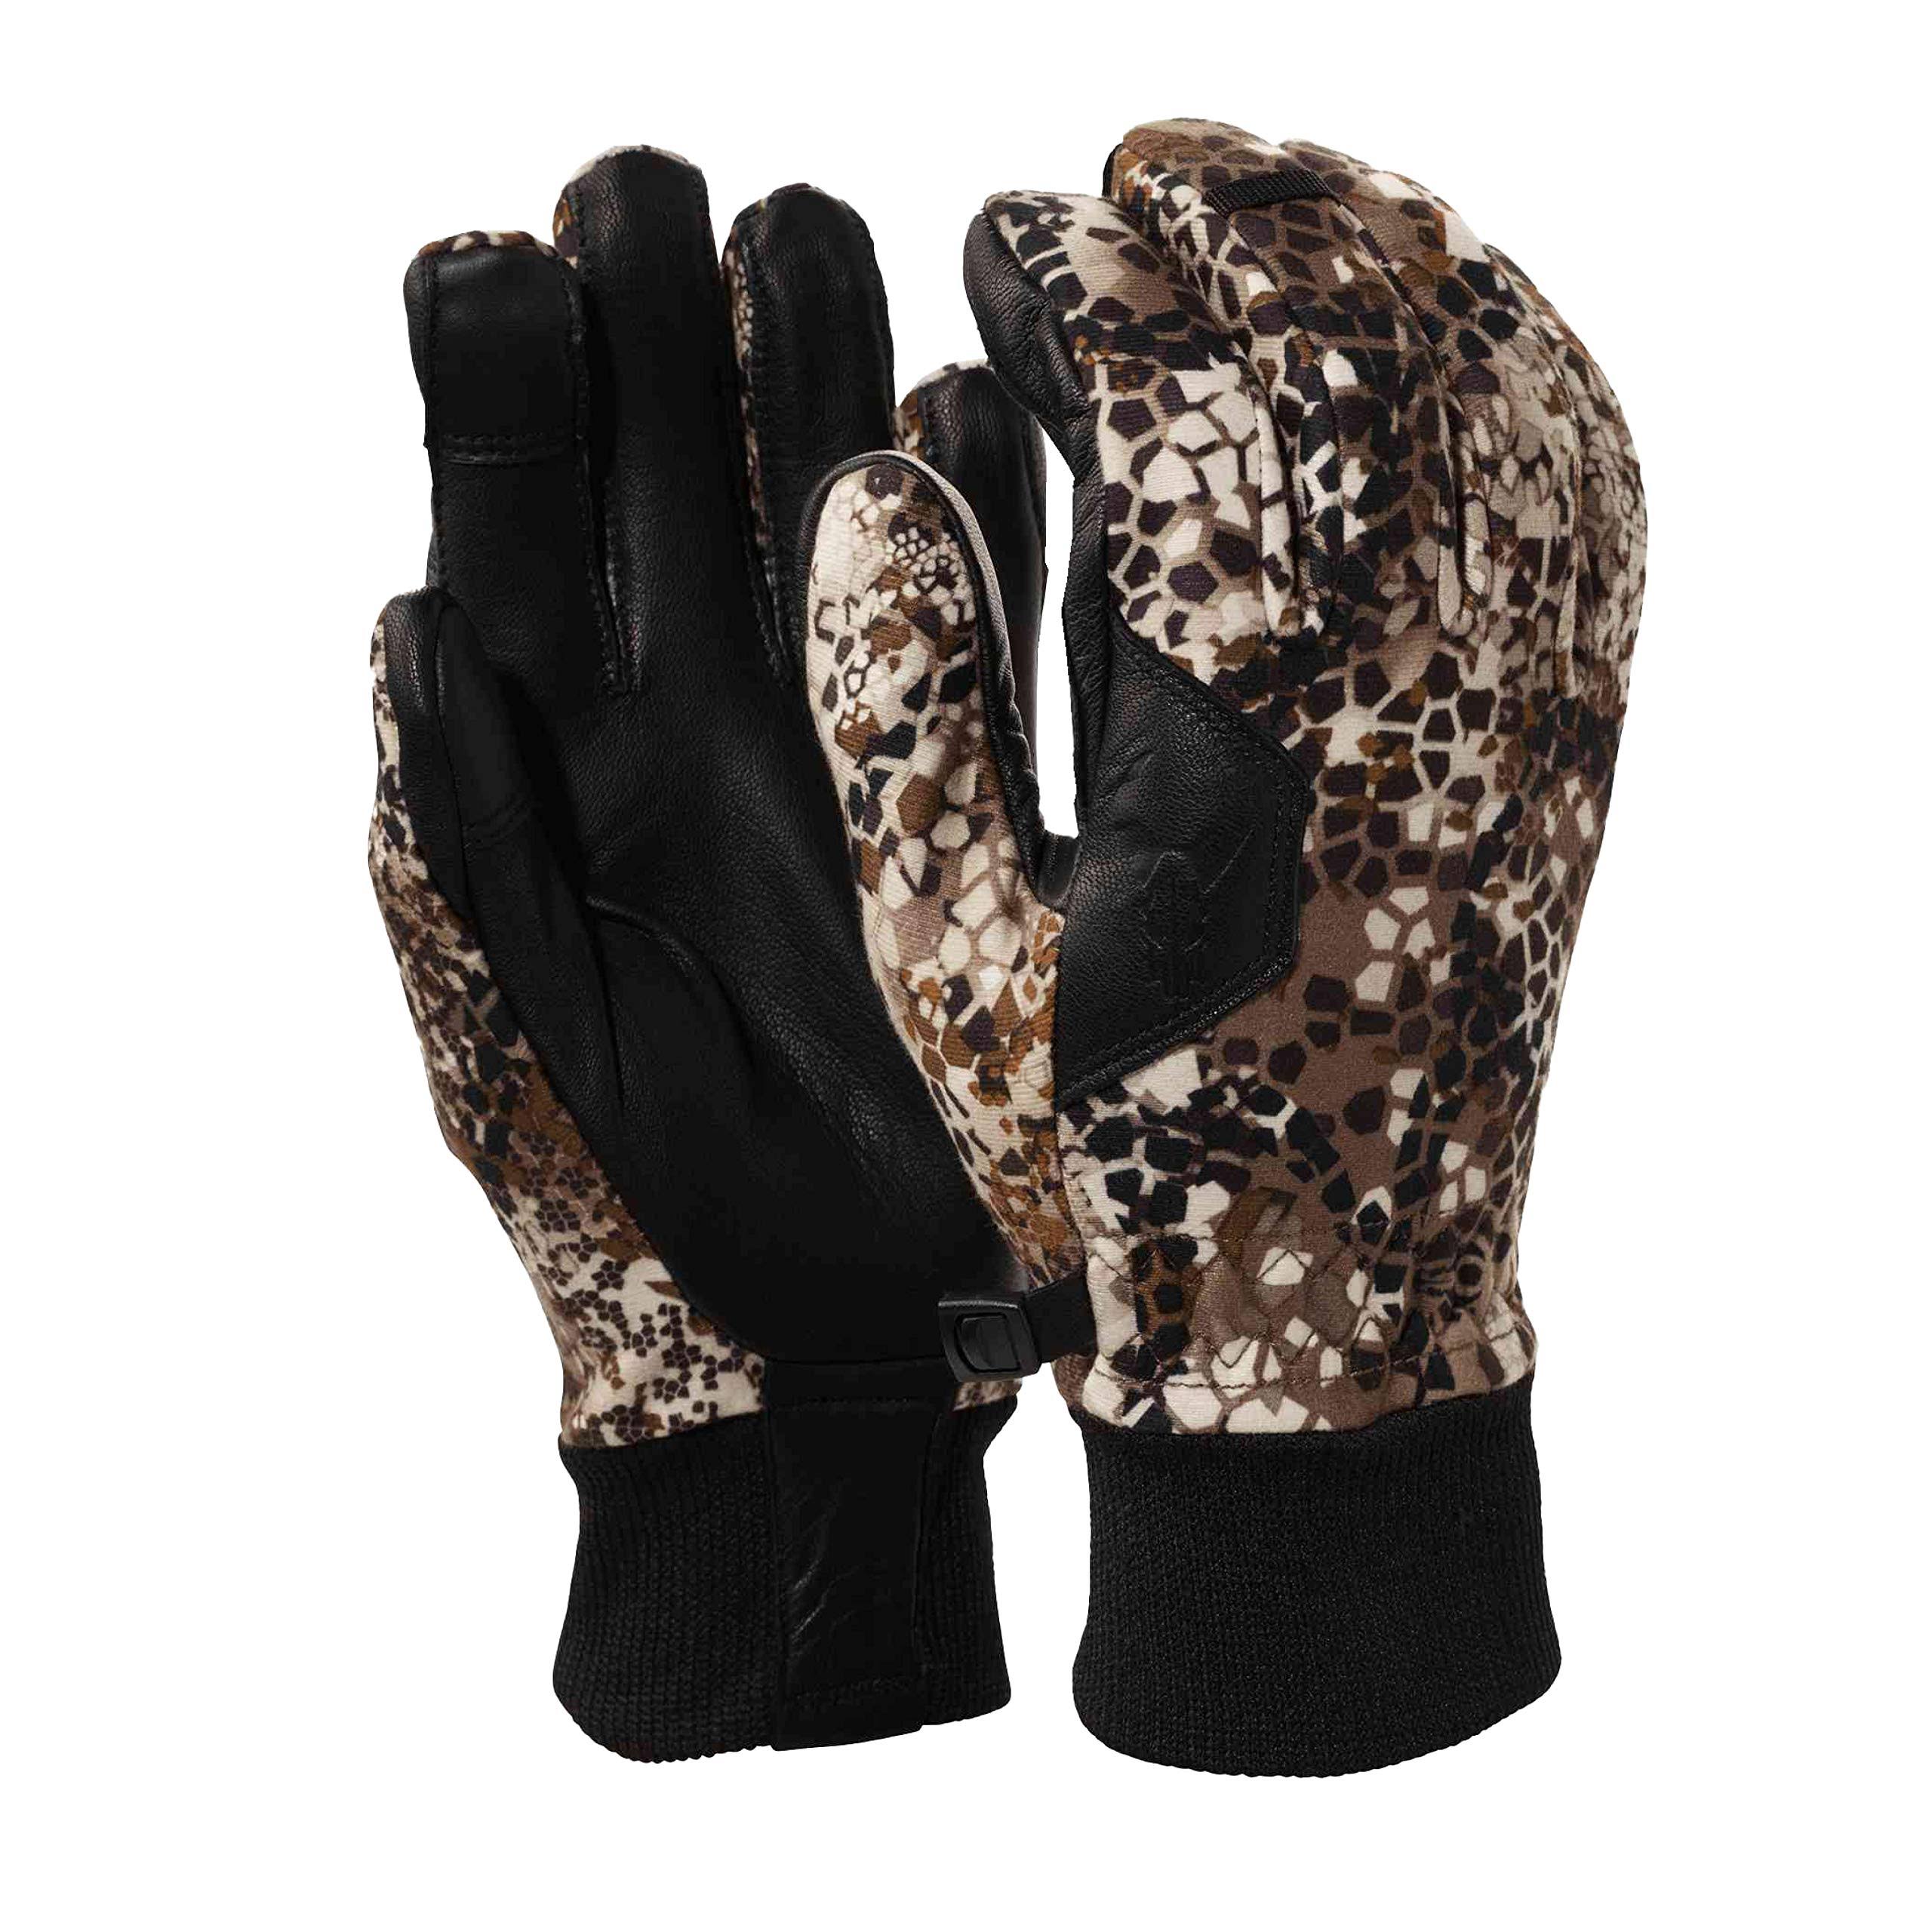 Badlands Hybrid Gloves - Approach FX, Medium